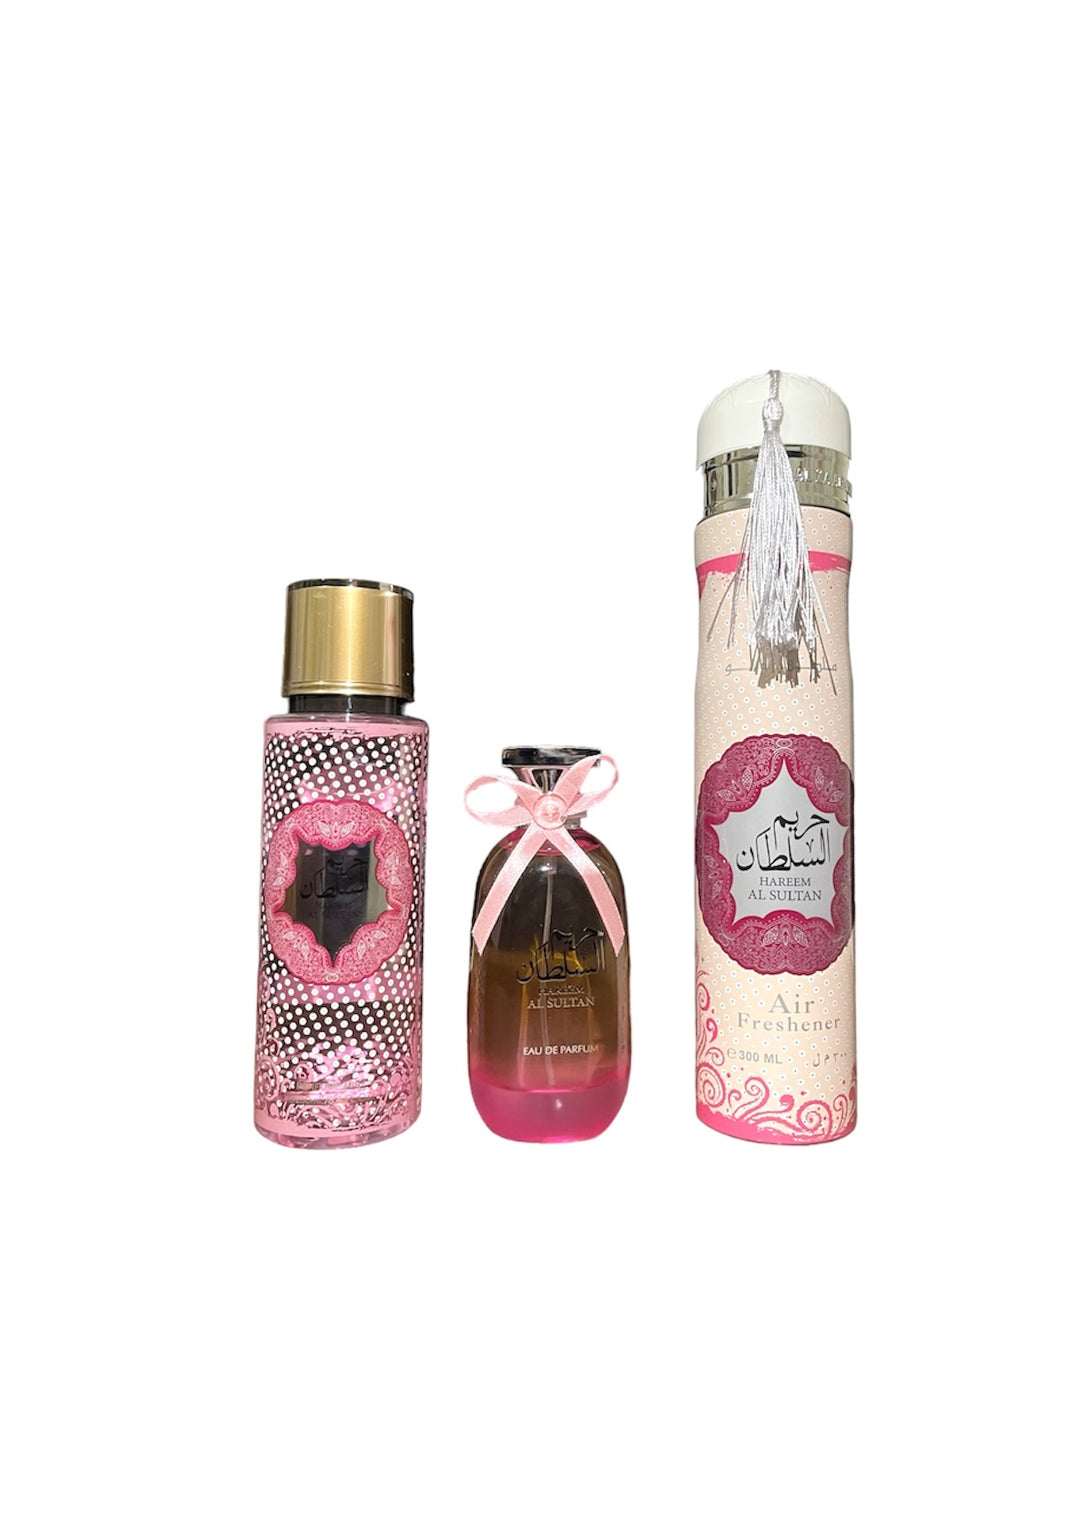 Hareem Al Sultan Collection 3-Piece Gift Set Eau De Parfum / Air Freshener / Mist By Ard Al Zaafaran